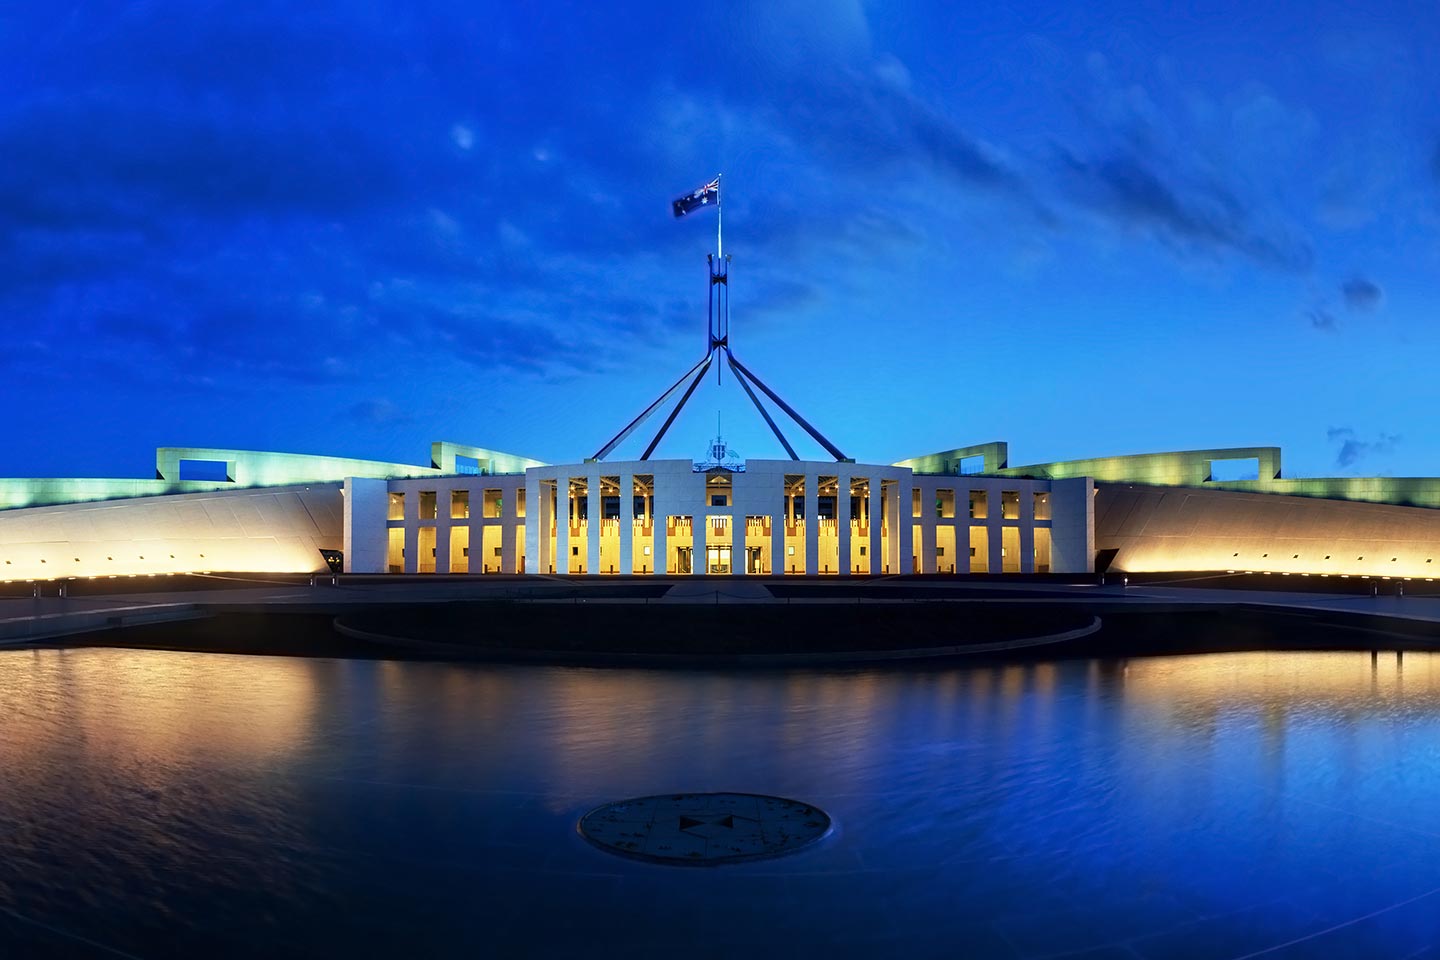 Our Australian Senate Inquiry submission